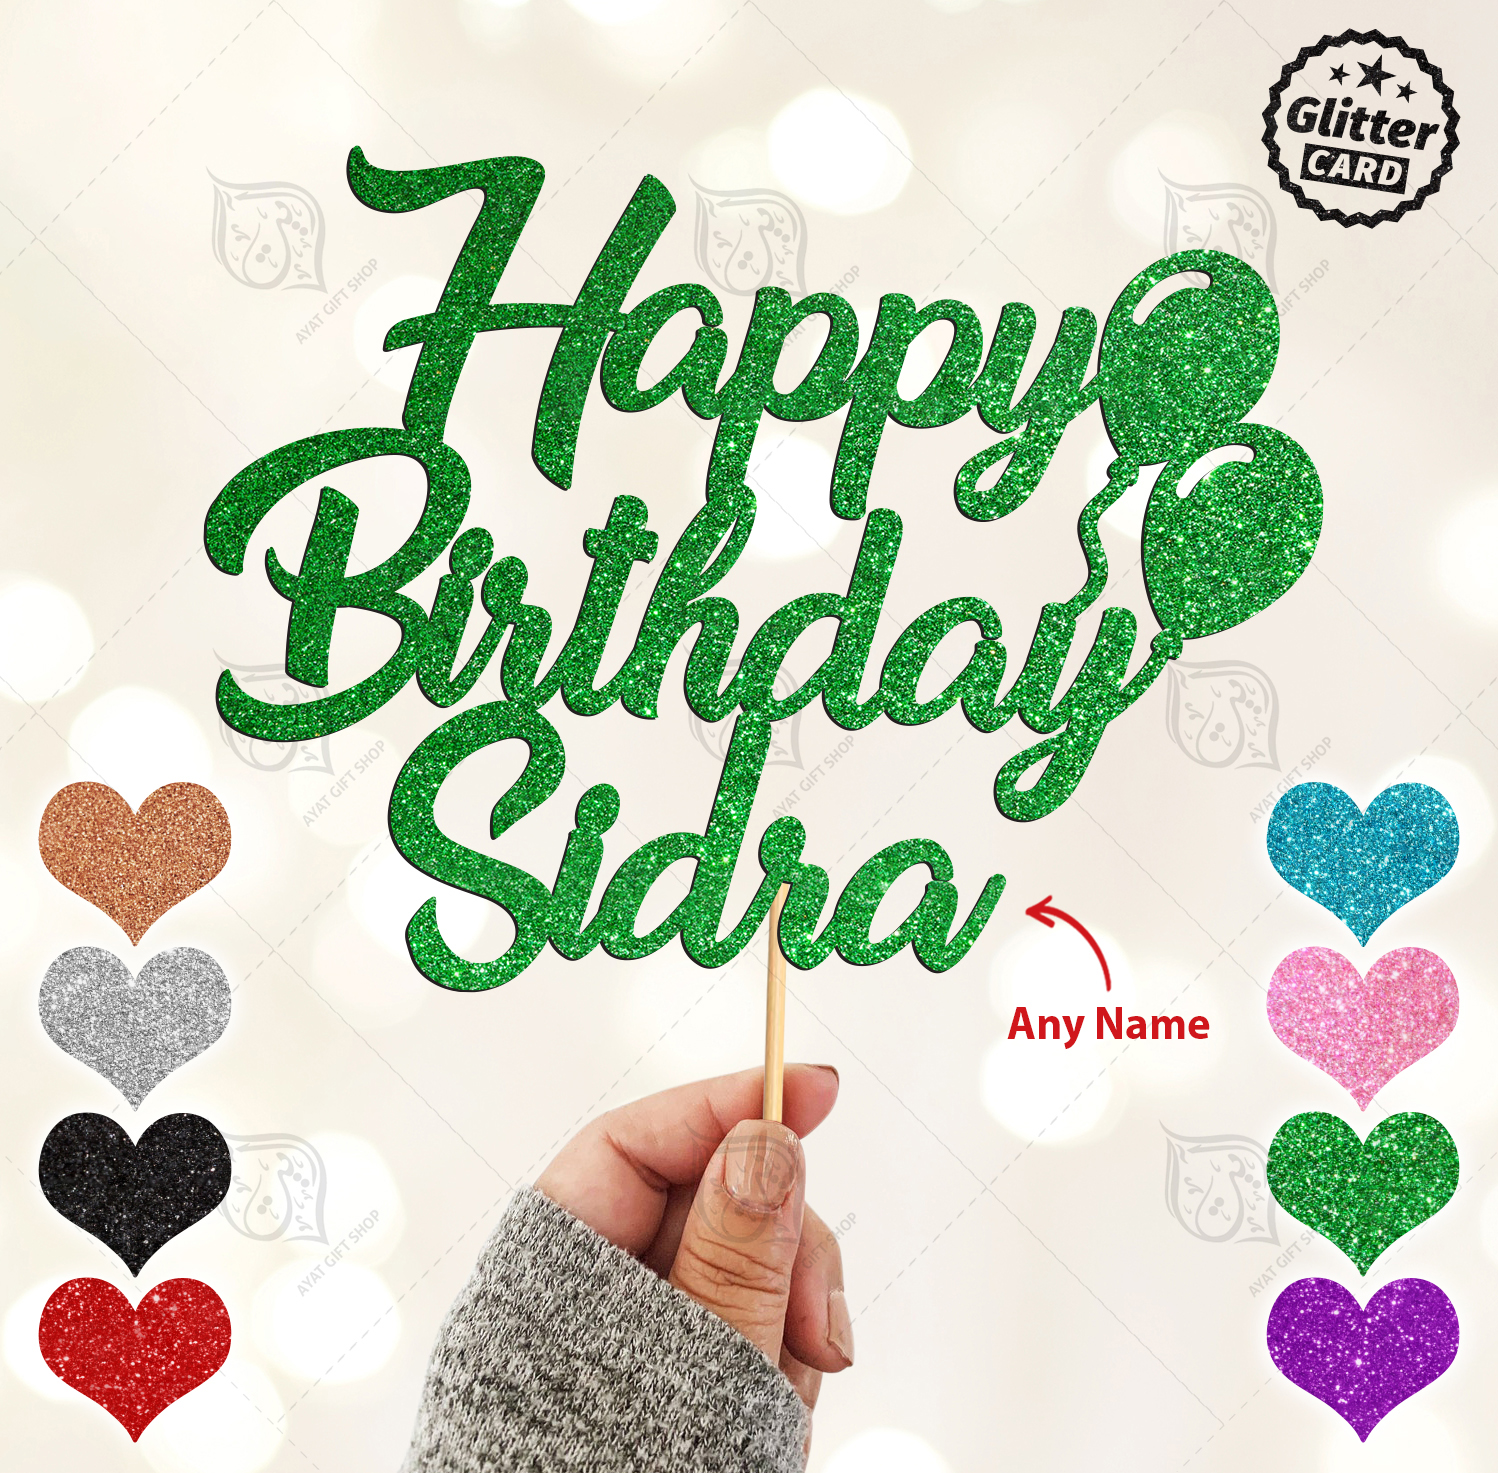 Happy Birthday To You | Birthday Song | Birthday Wishes for Sidra | Birthday  Status for Sidra - YouTube